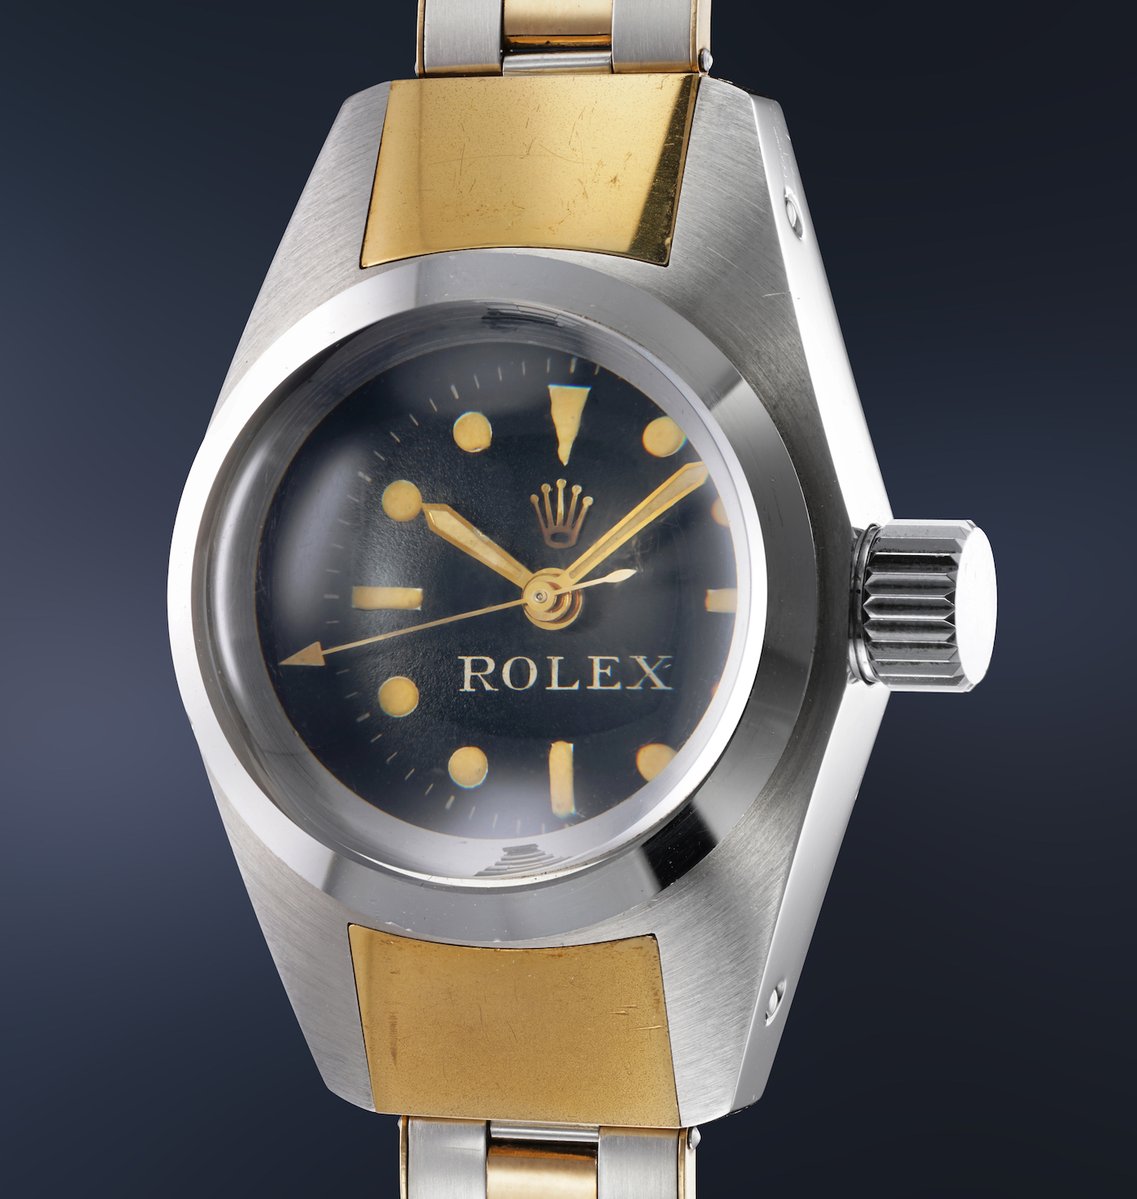 Rolex Deep Sea Special auction